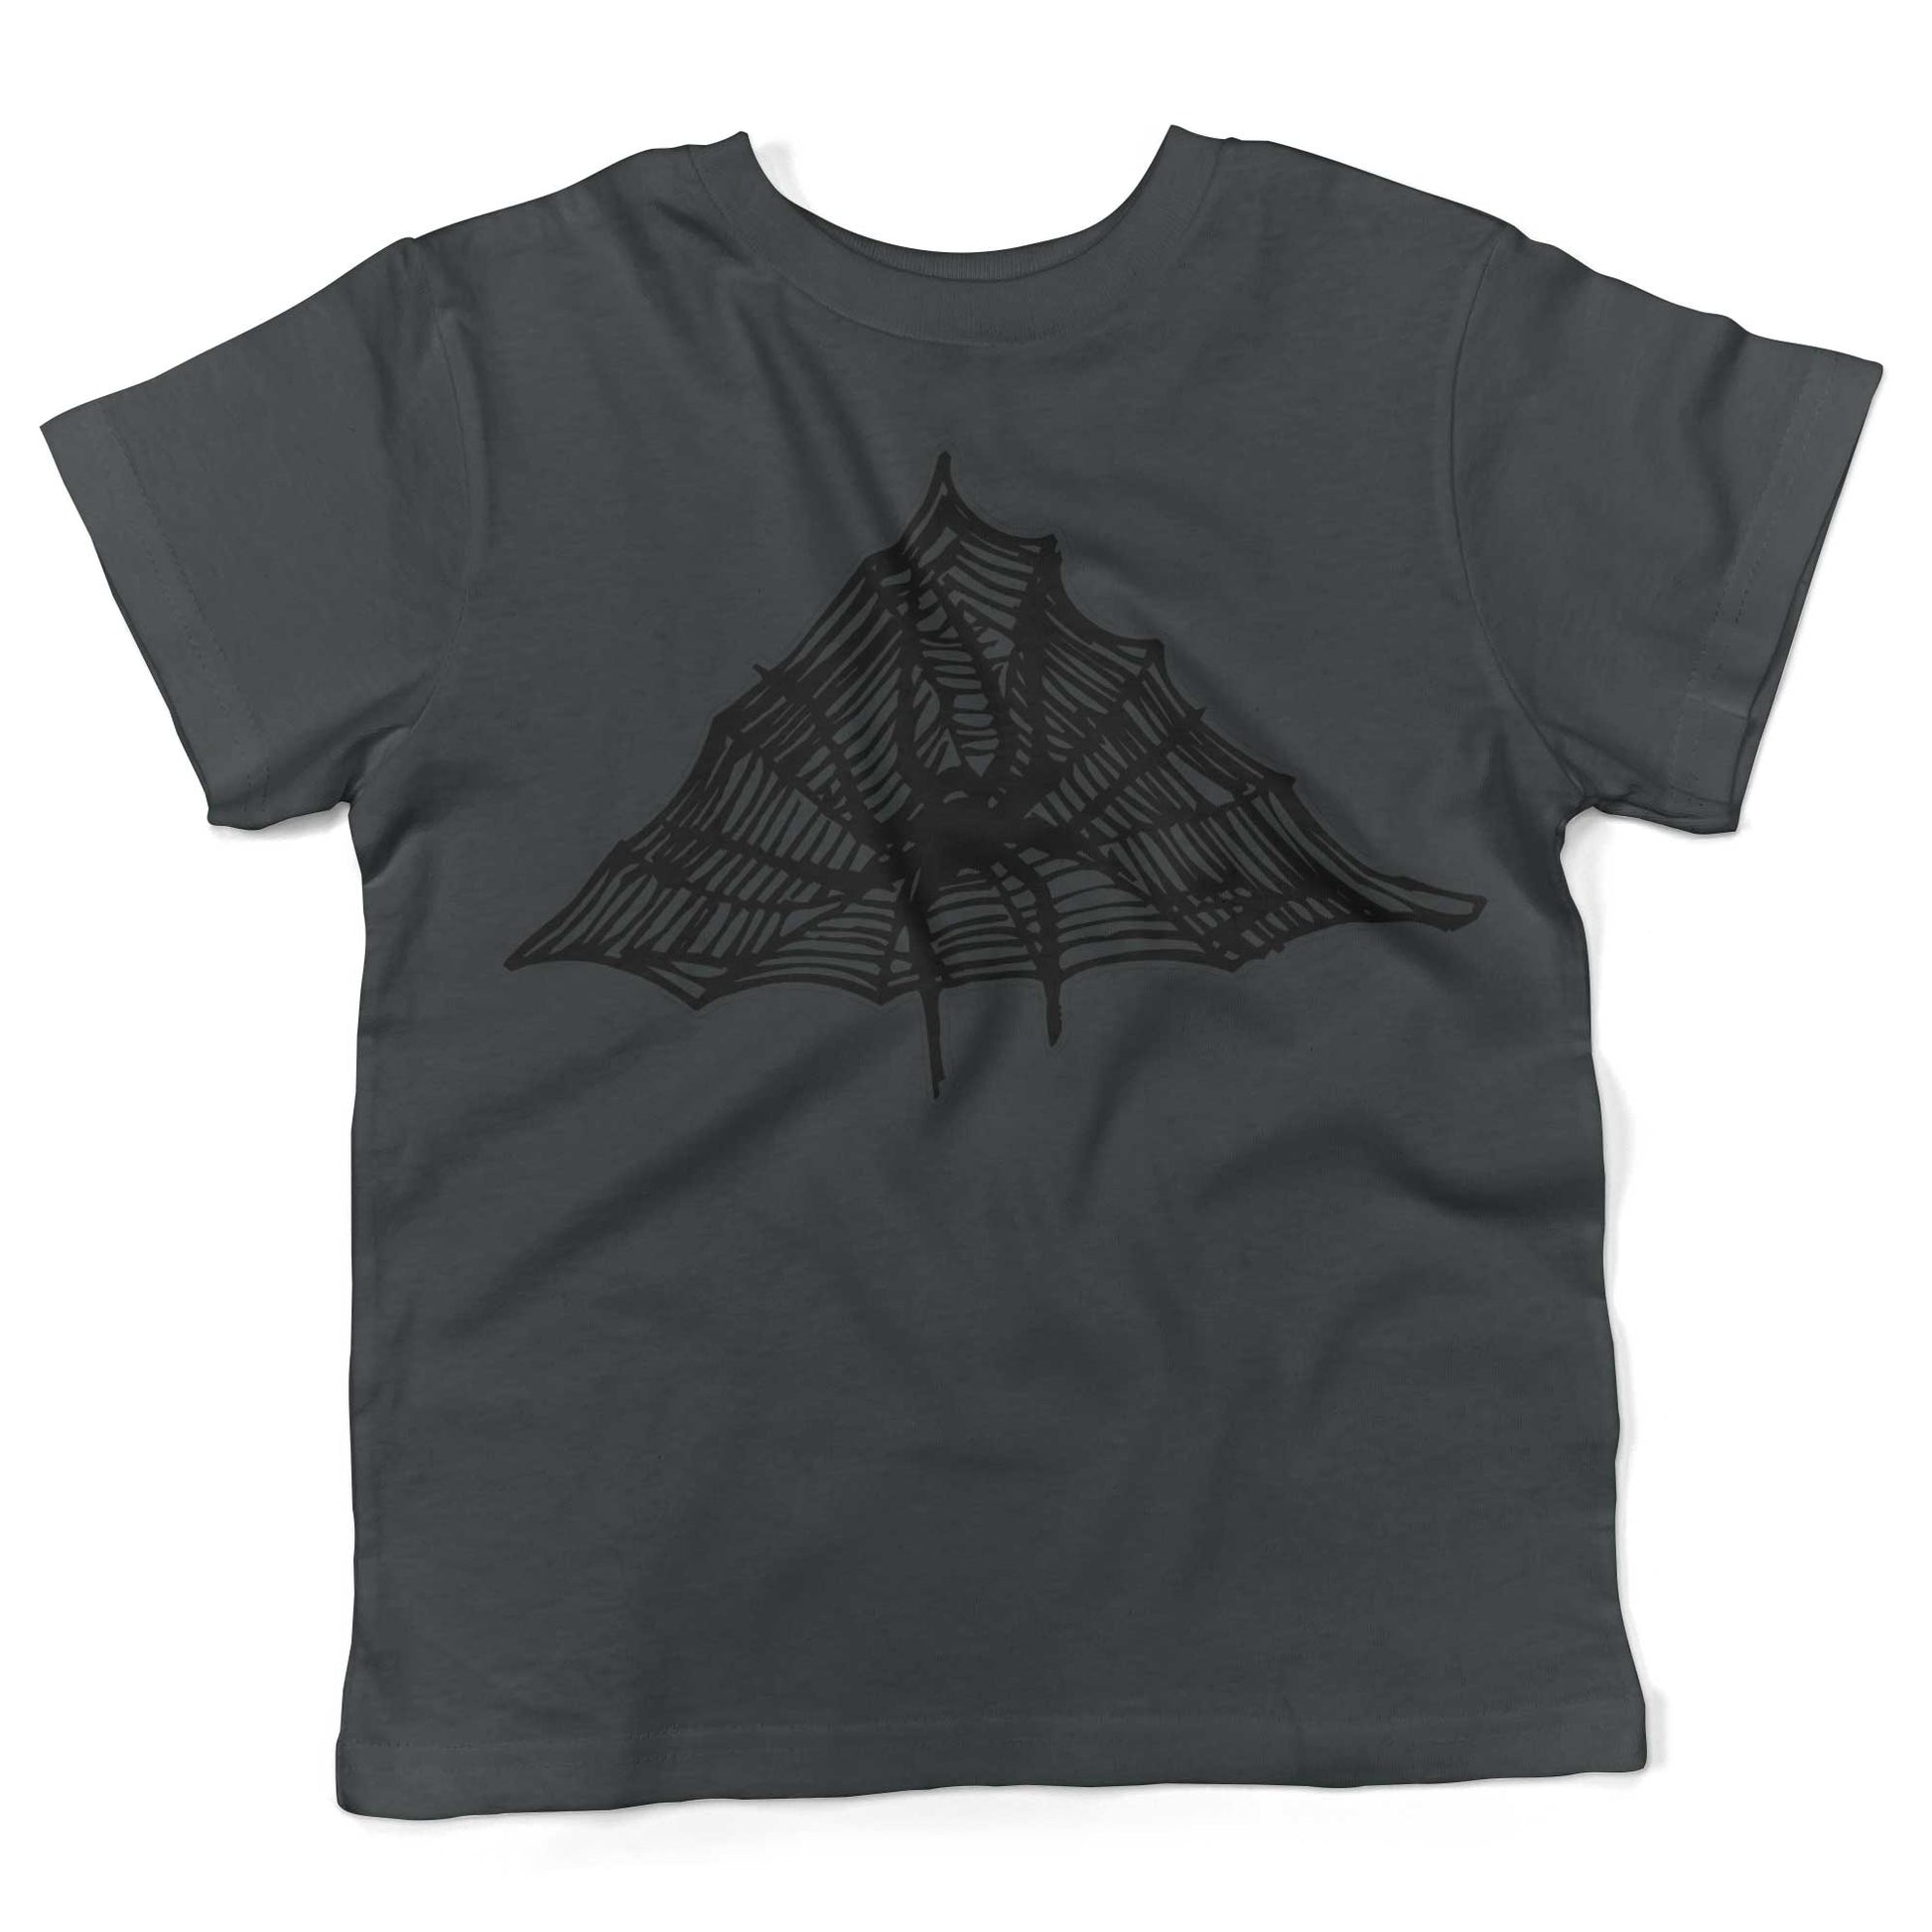 Spiderweb Toddler Shirt-Asphalt-2T